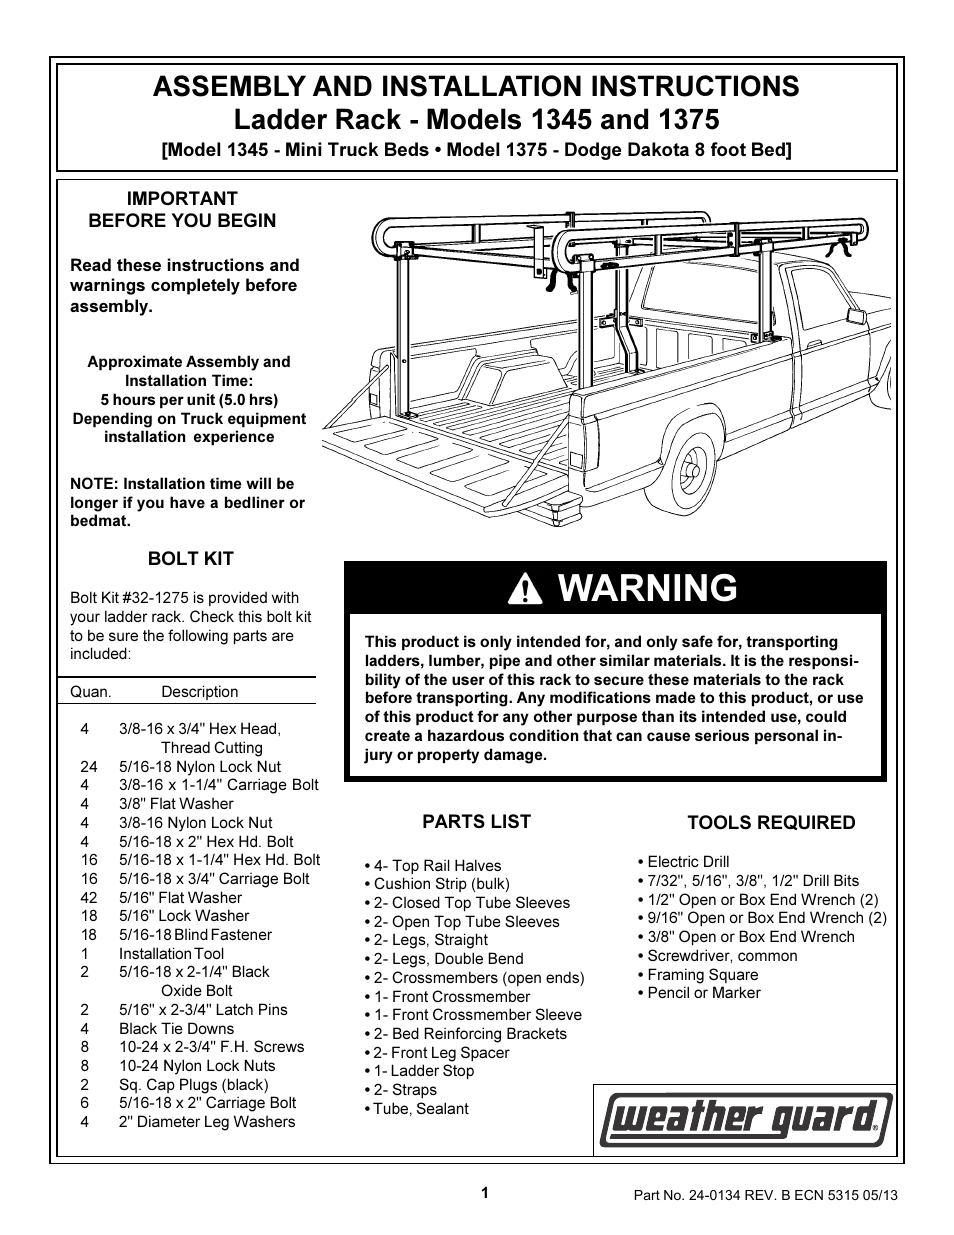 Model 1375 Ladder Rack System, Steel, Compact, Long Bed